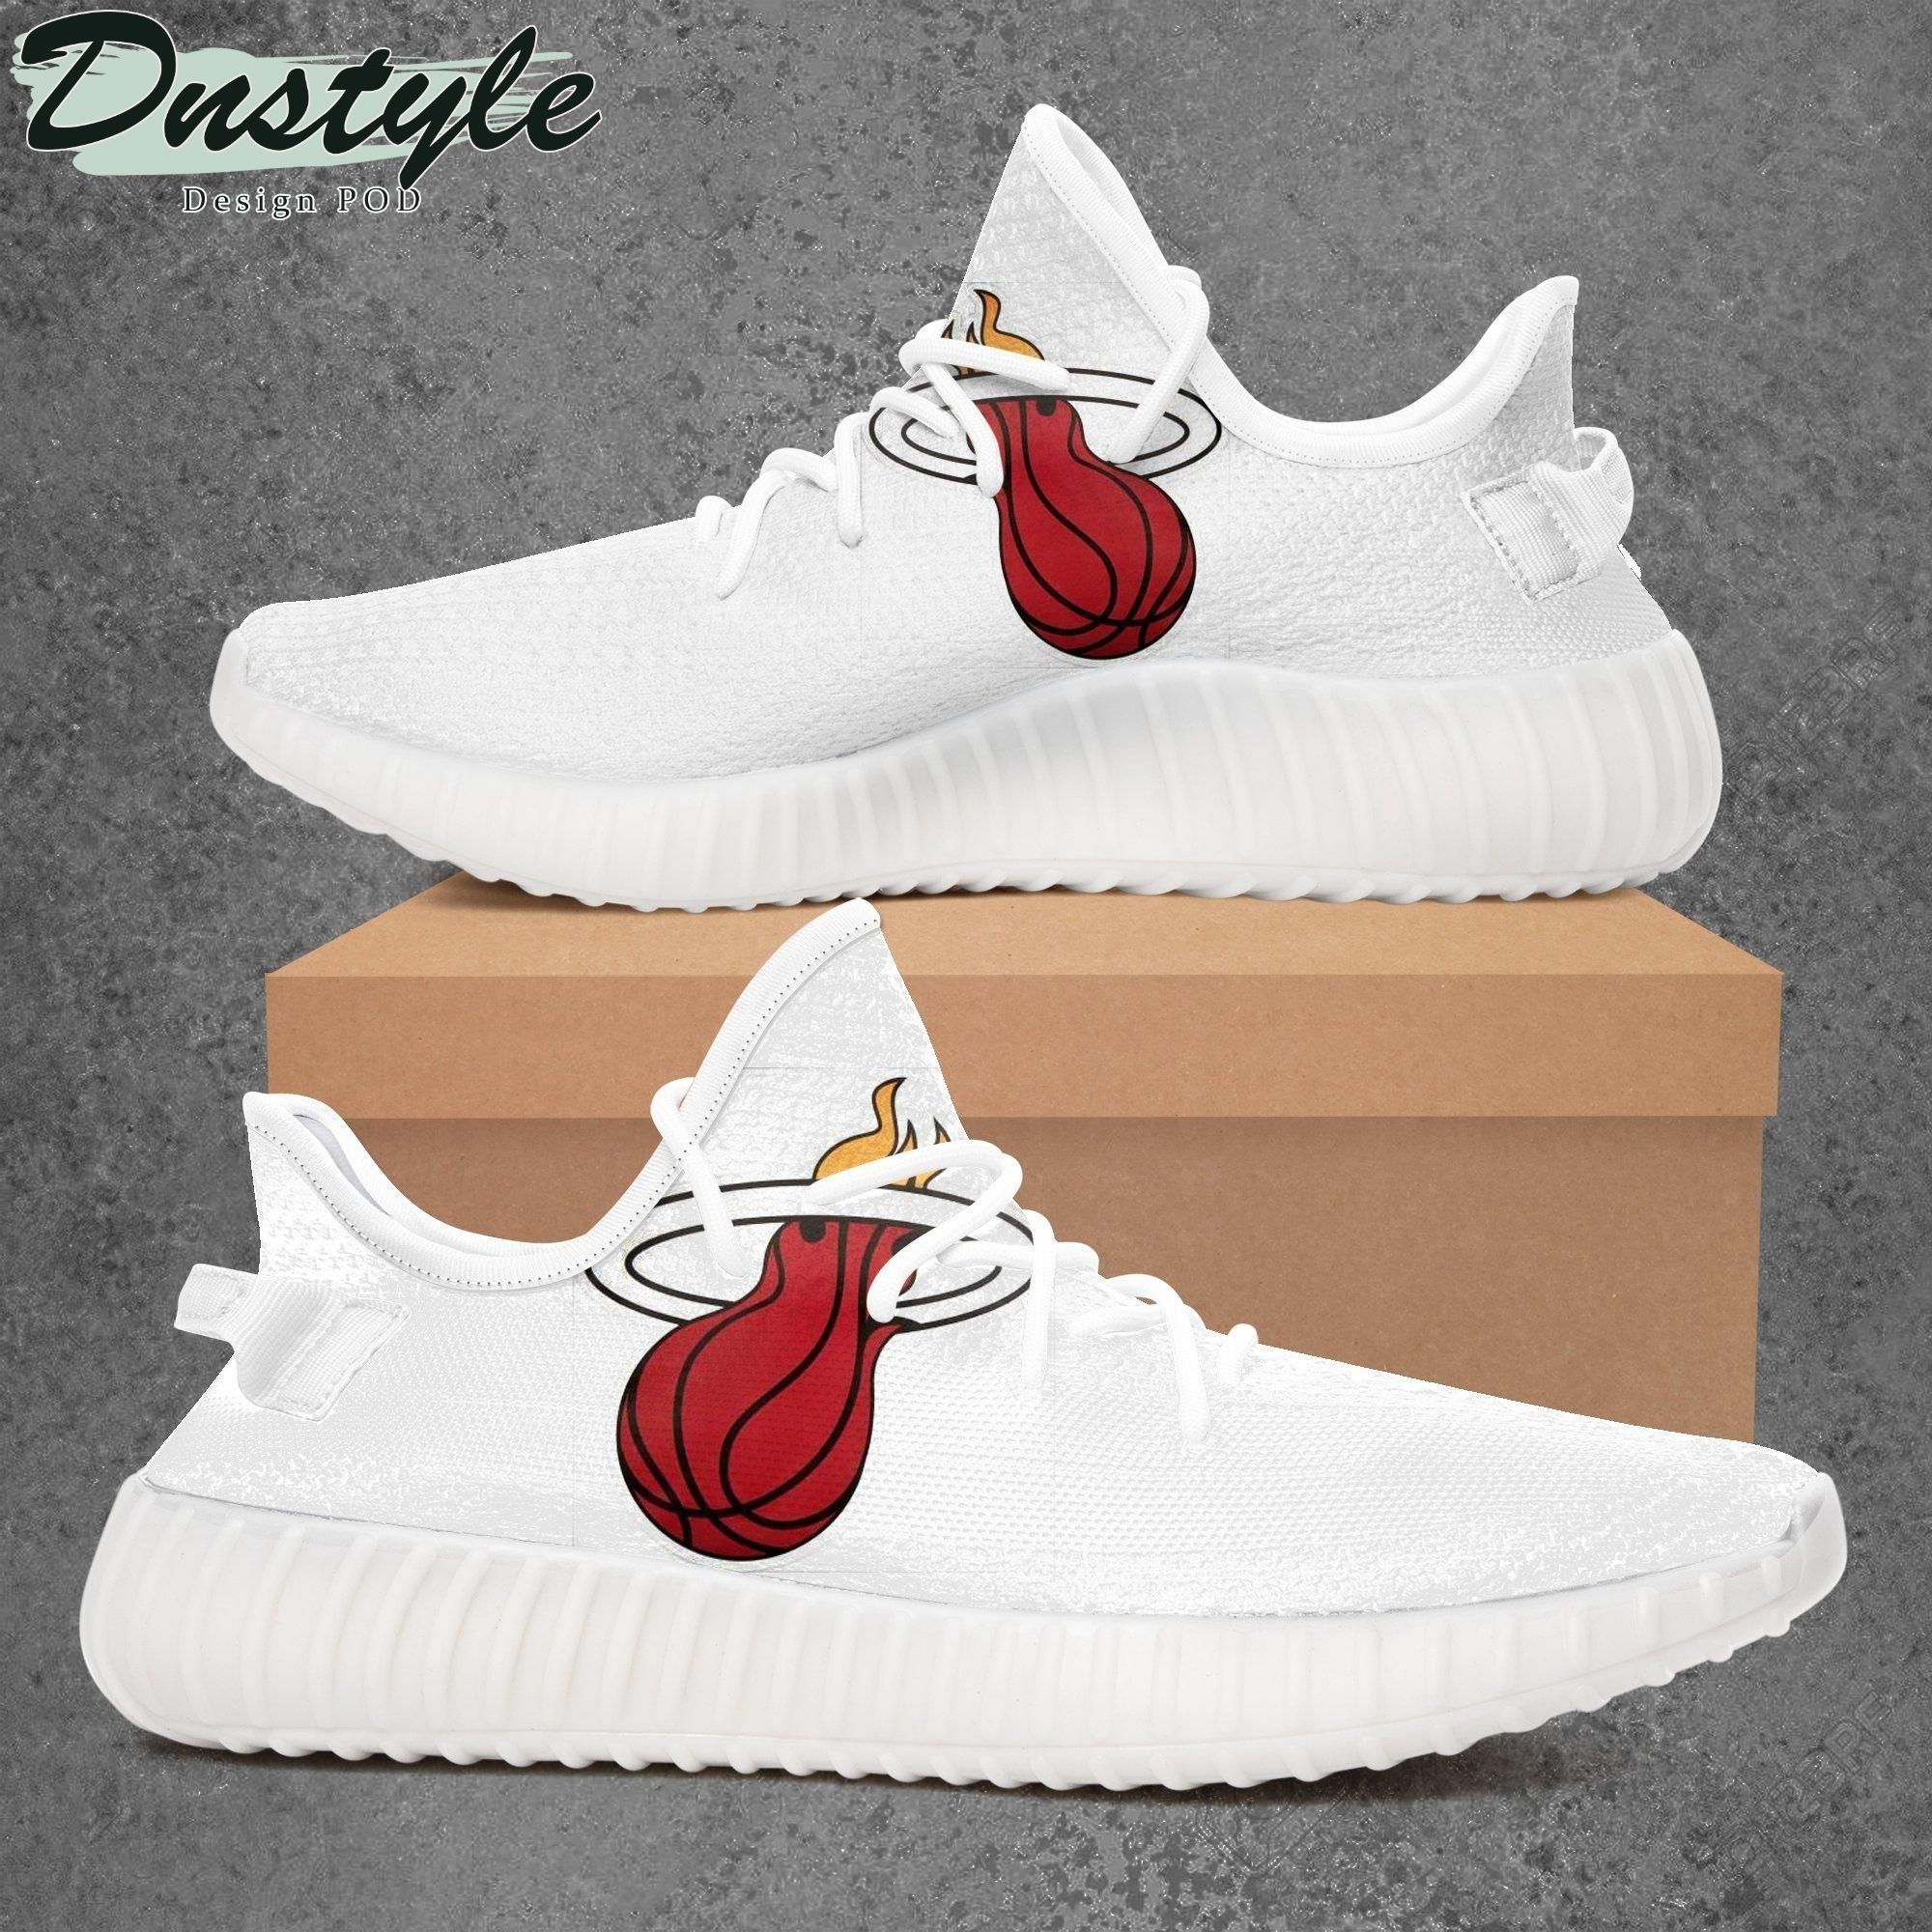 Miami Heat NBA Yeezy Shoes Sneakers